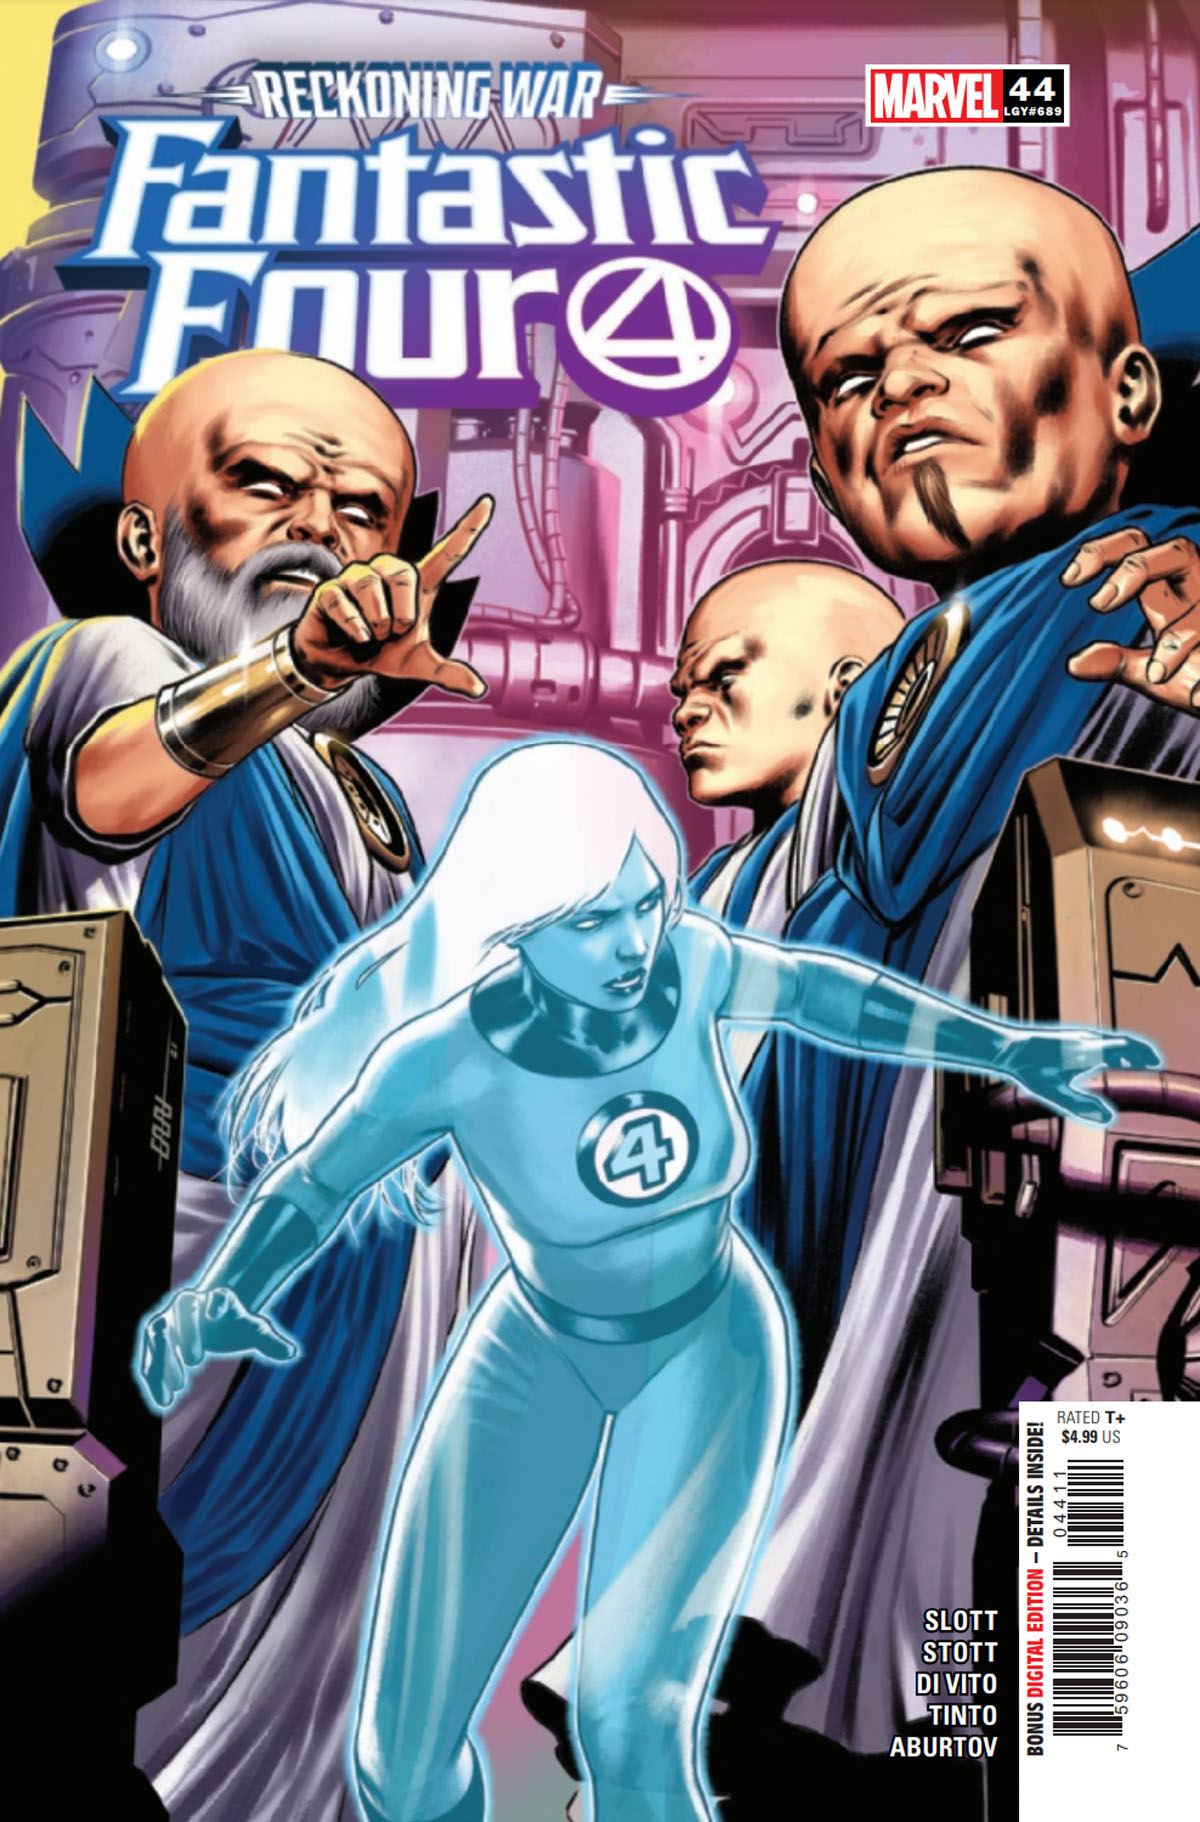 Fantastic Four #44 cover